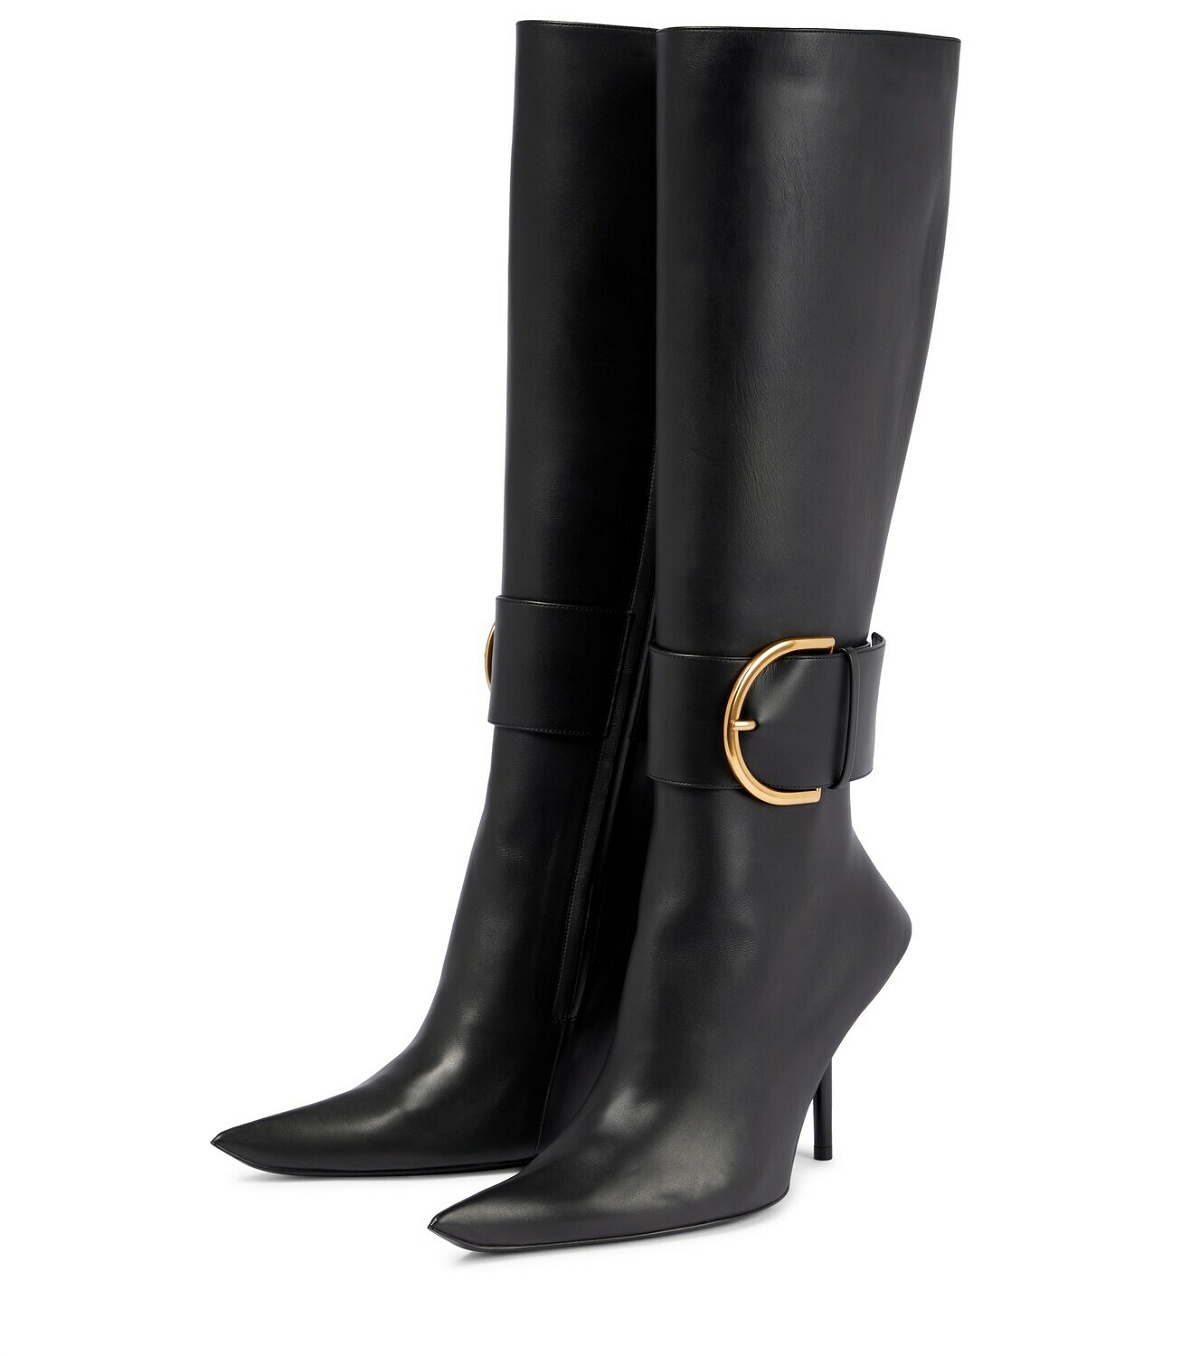 Balenciaga Essex leather knee-high boots Balenciaga